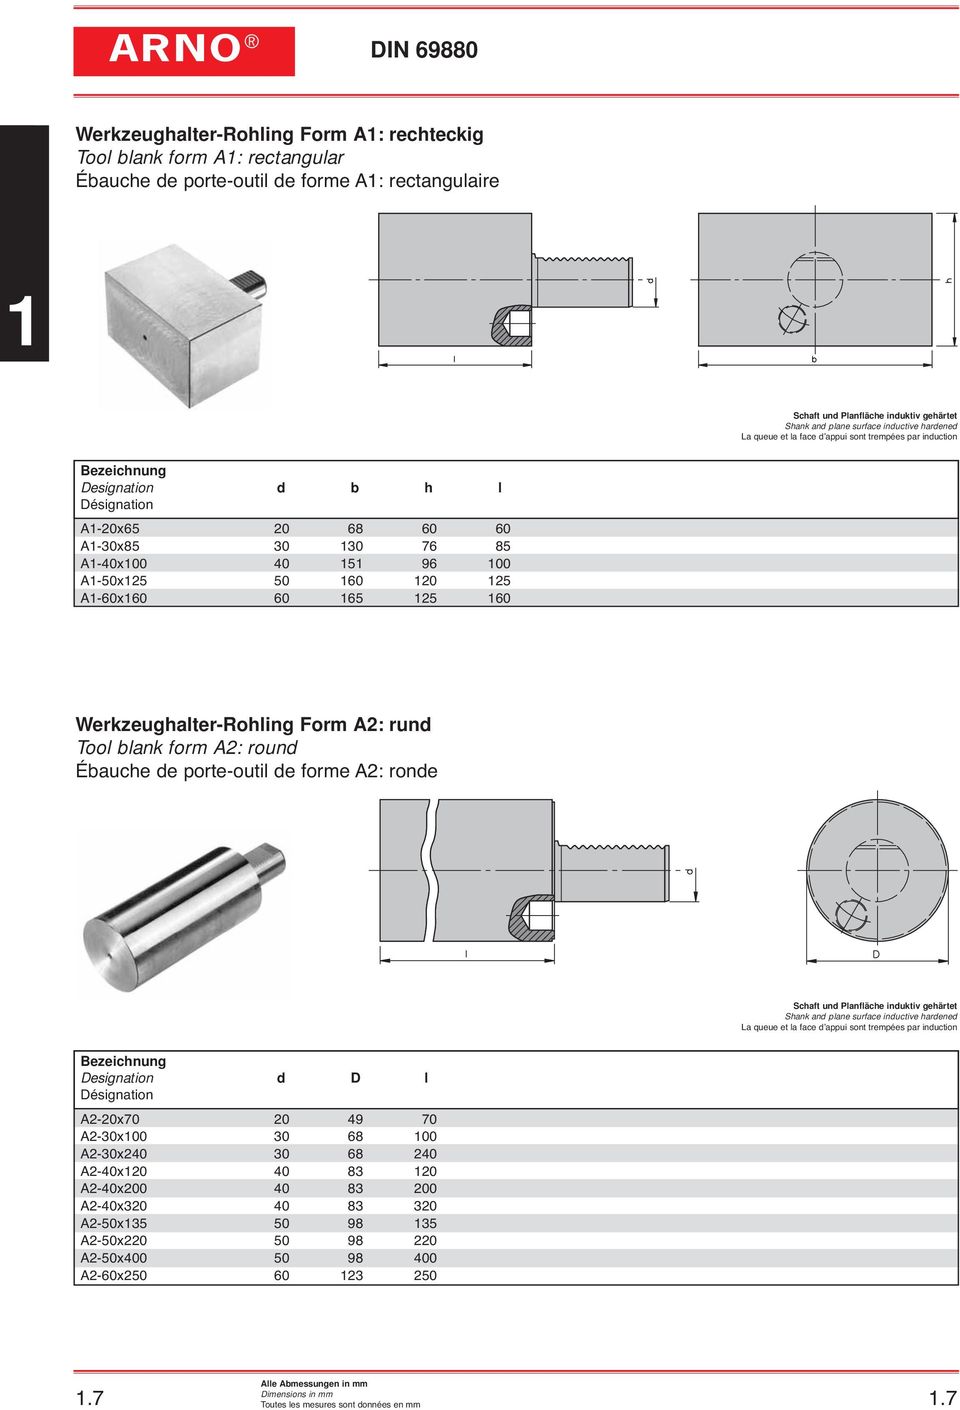 Werkzeughalter-Rohling Form A2: rund Tool blank form A2: round Ébauche de porte-outil de forme A2: ronde Schaft und Planfläche induktiv gehärtet Shank and plane surface